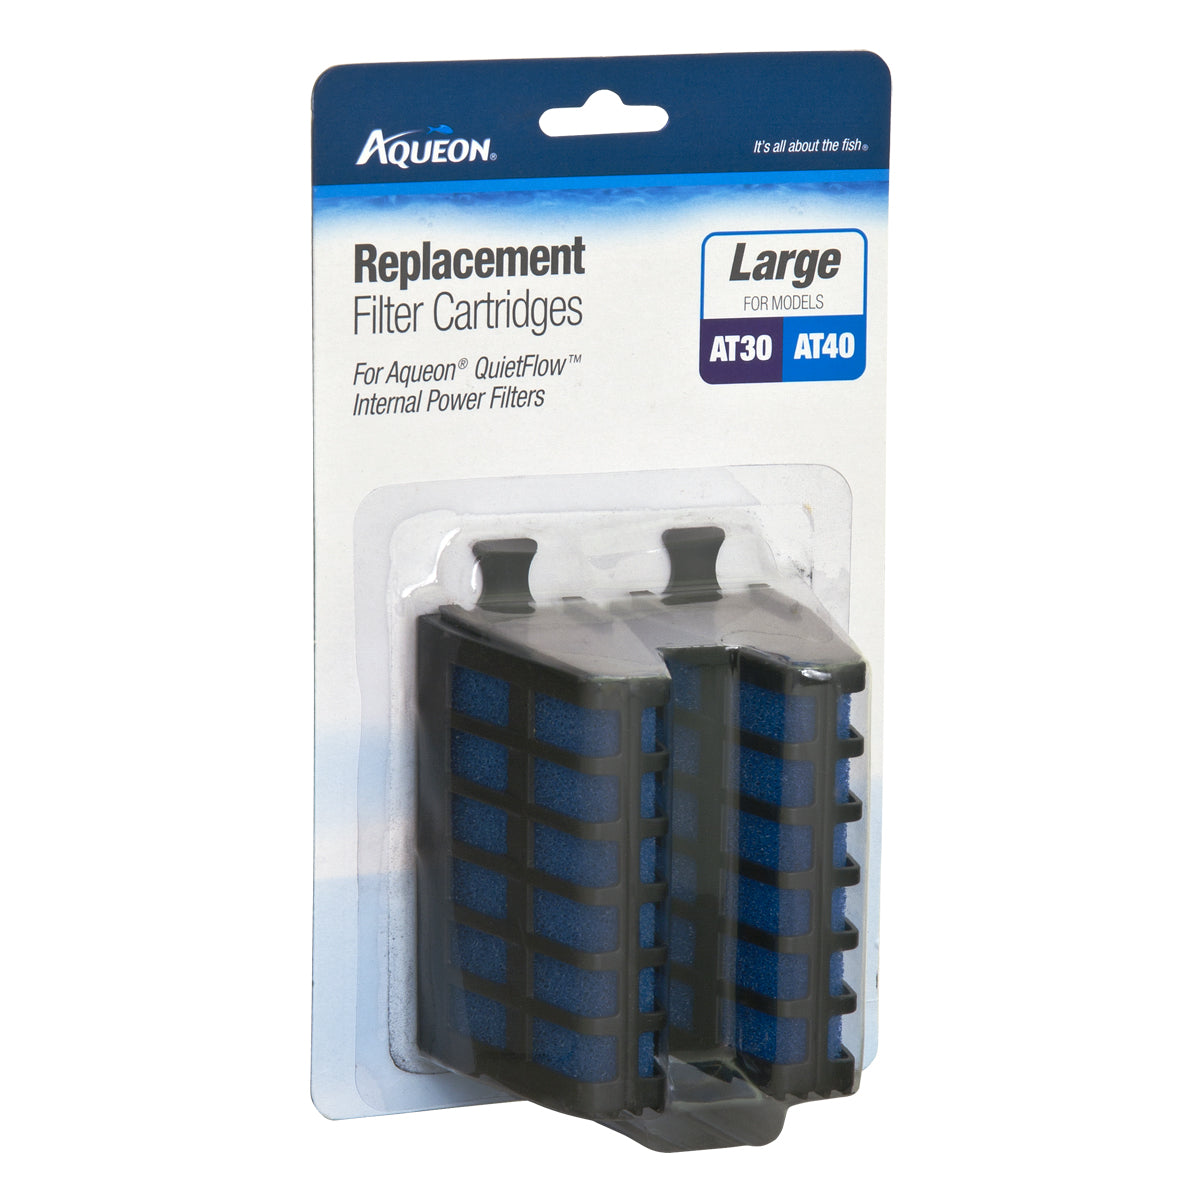 Aqueon Replacement Filter Cartridge QuietFlow Internal Power Filter Med-Large - 2pk